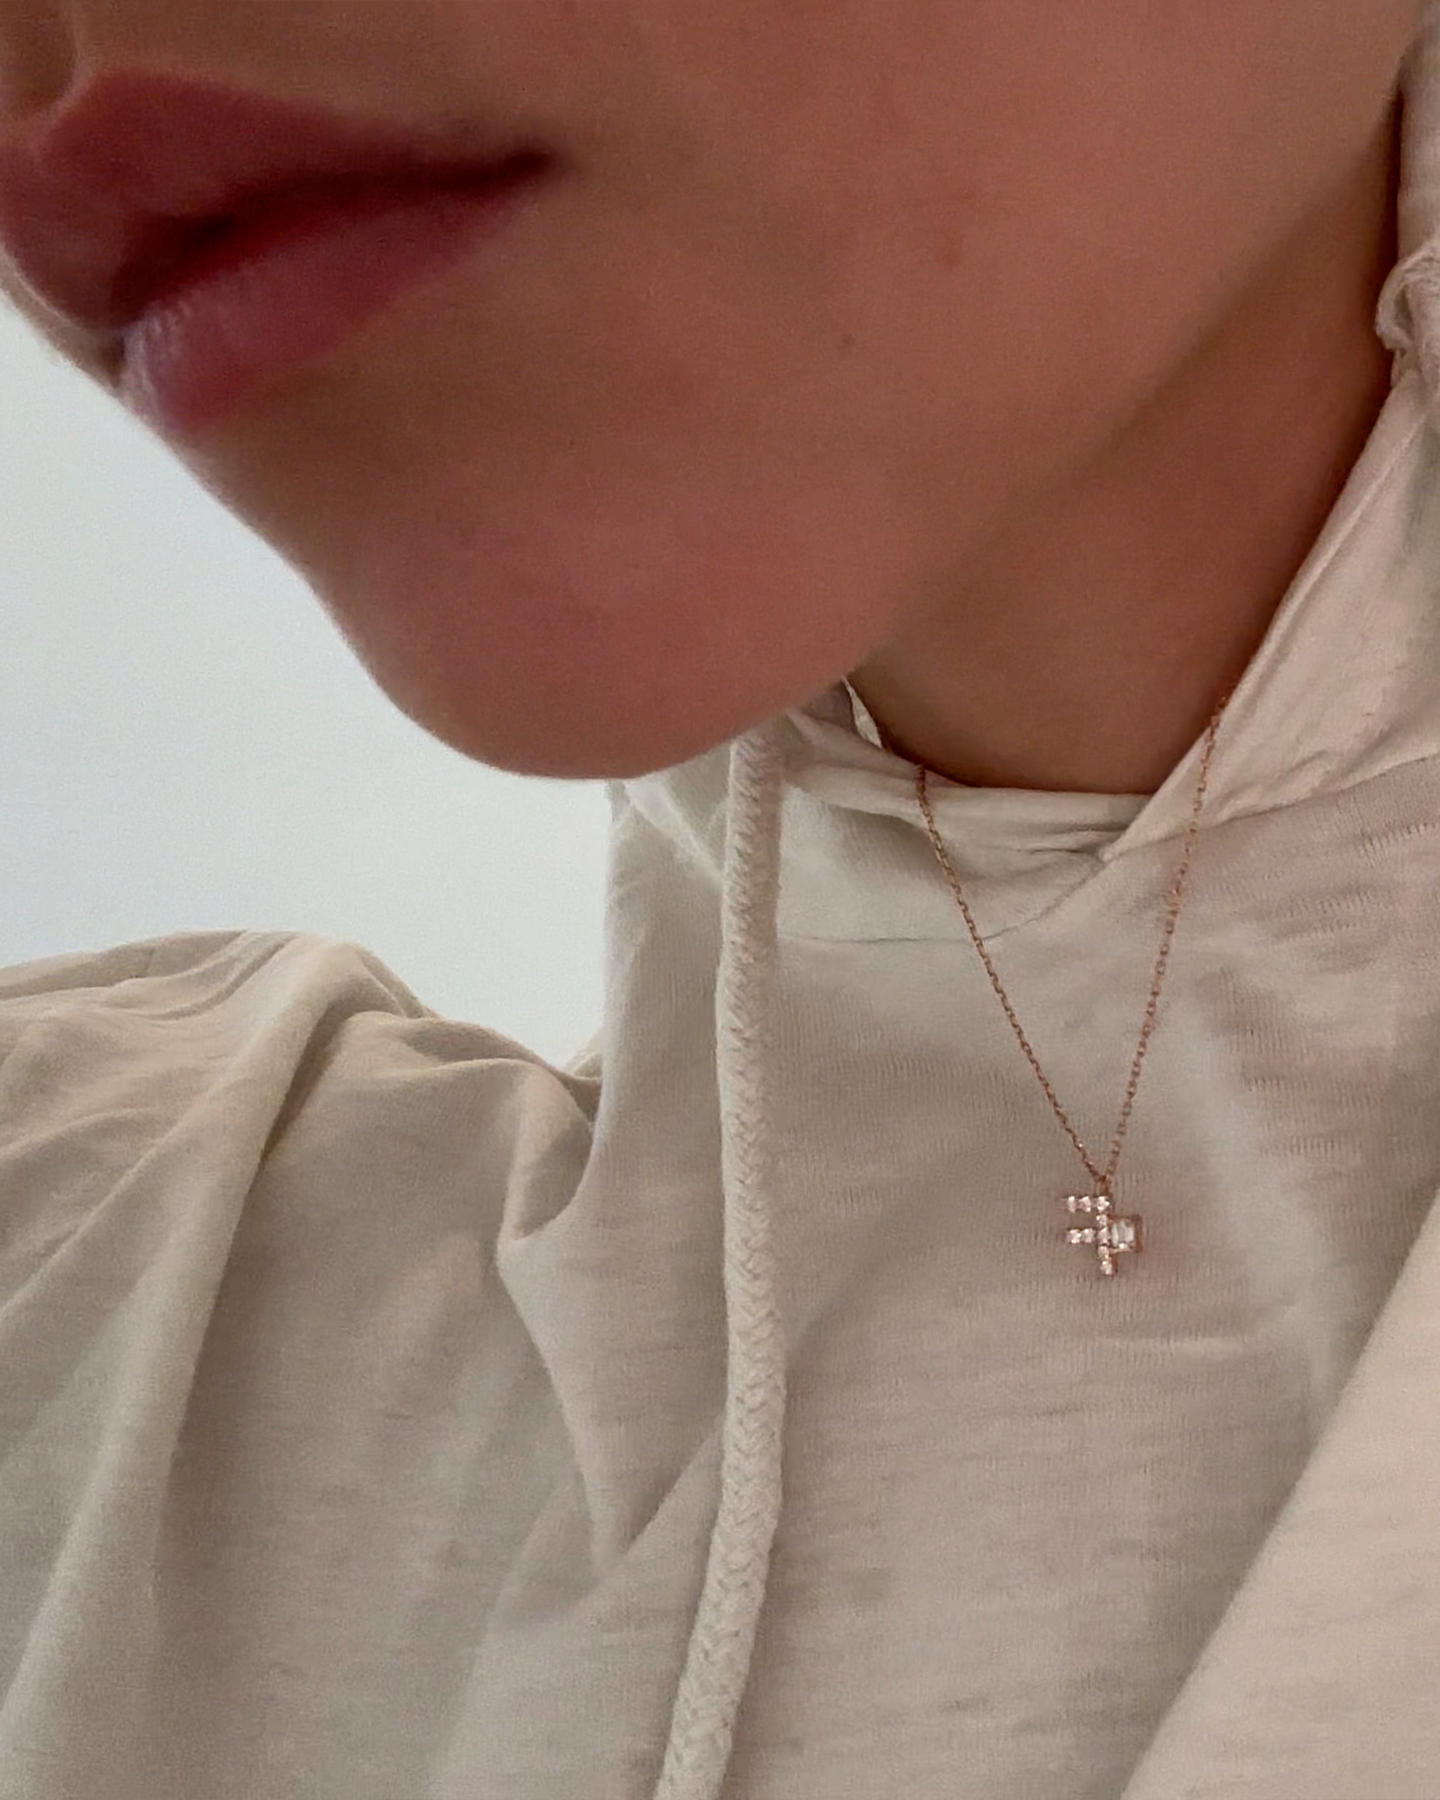 ALPHABET Diamond Necklace F Rose